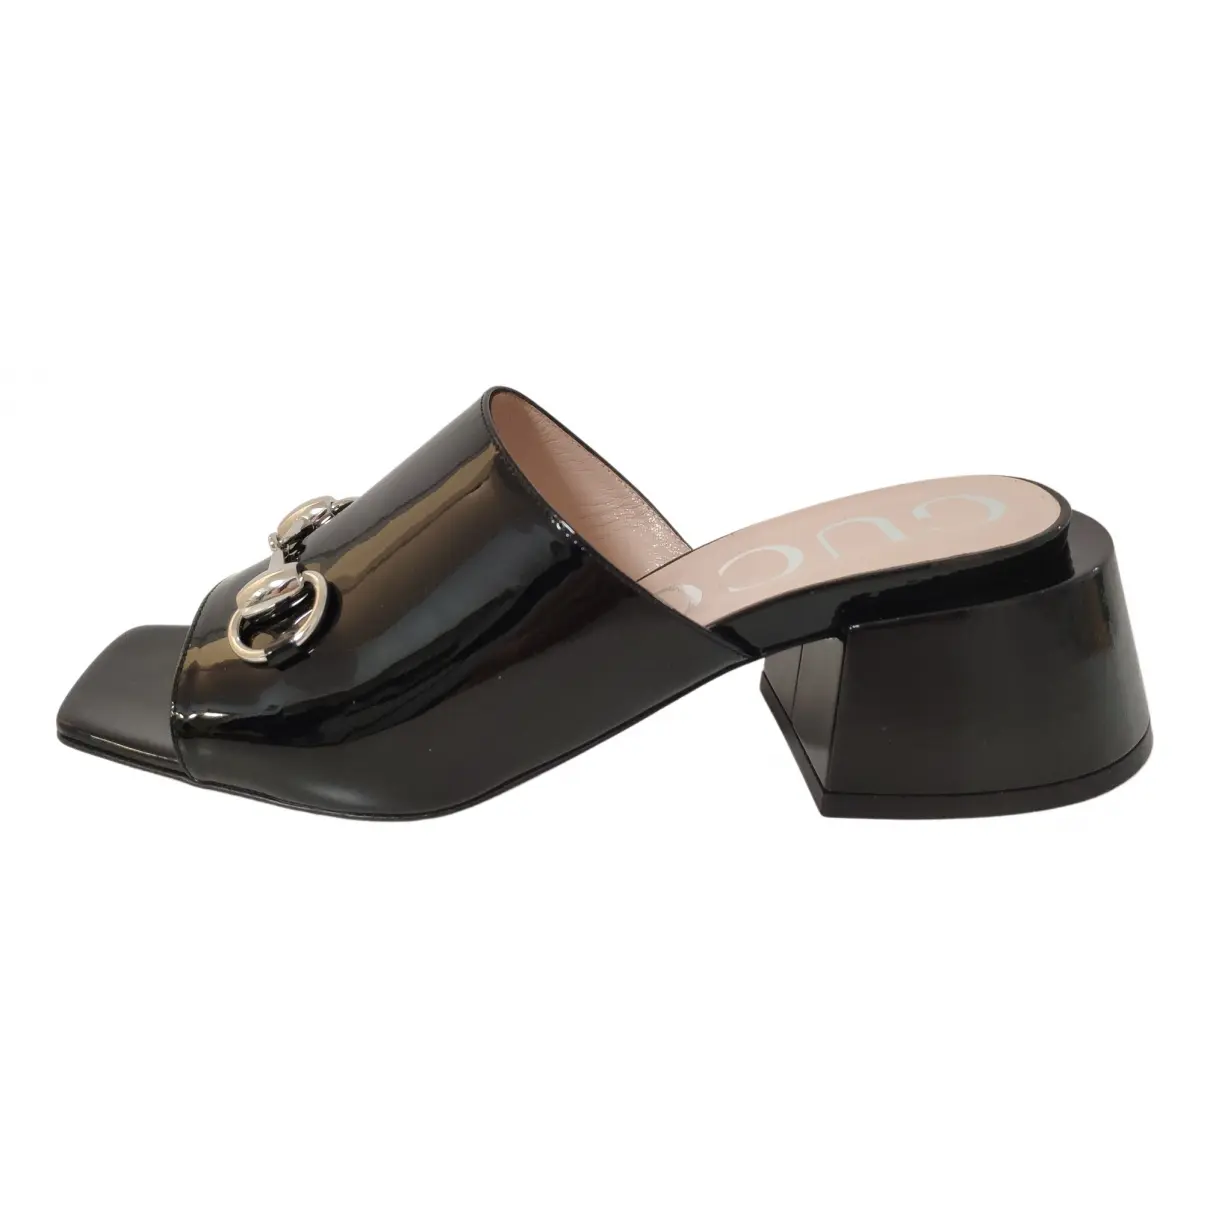 Patent leather sandal Gucci